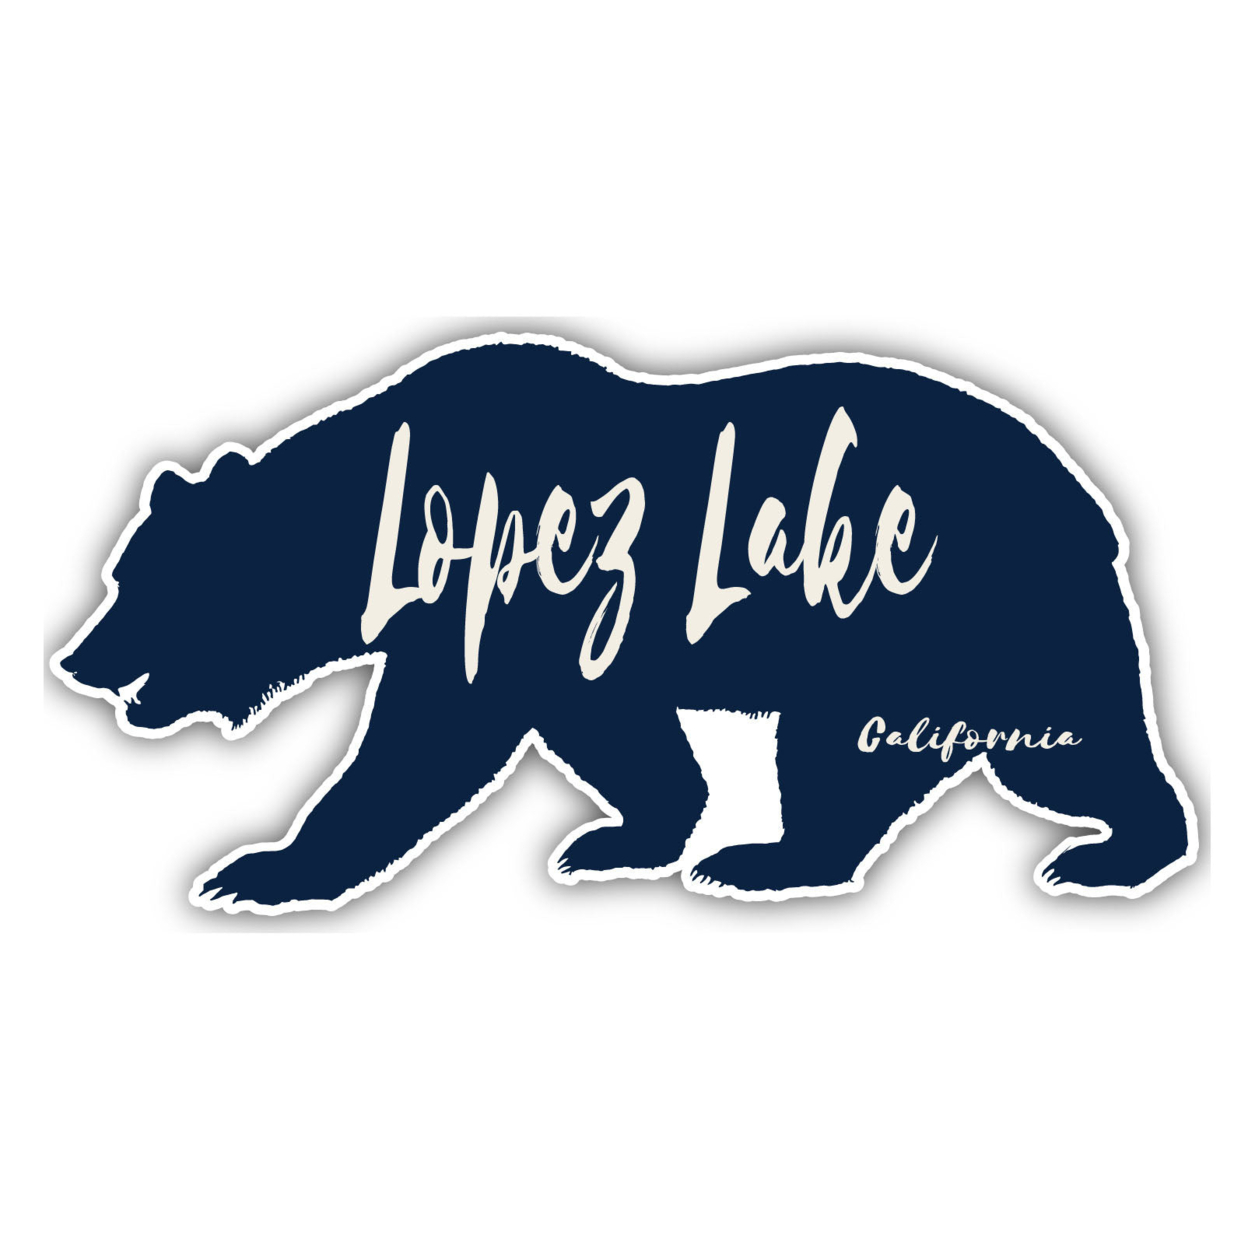 Lopez Lake California Souvenir Decorative Stickers (Choose Theme And Size) - 2-Inch, Bear